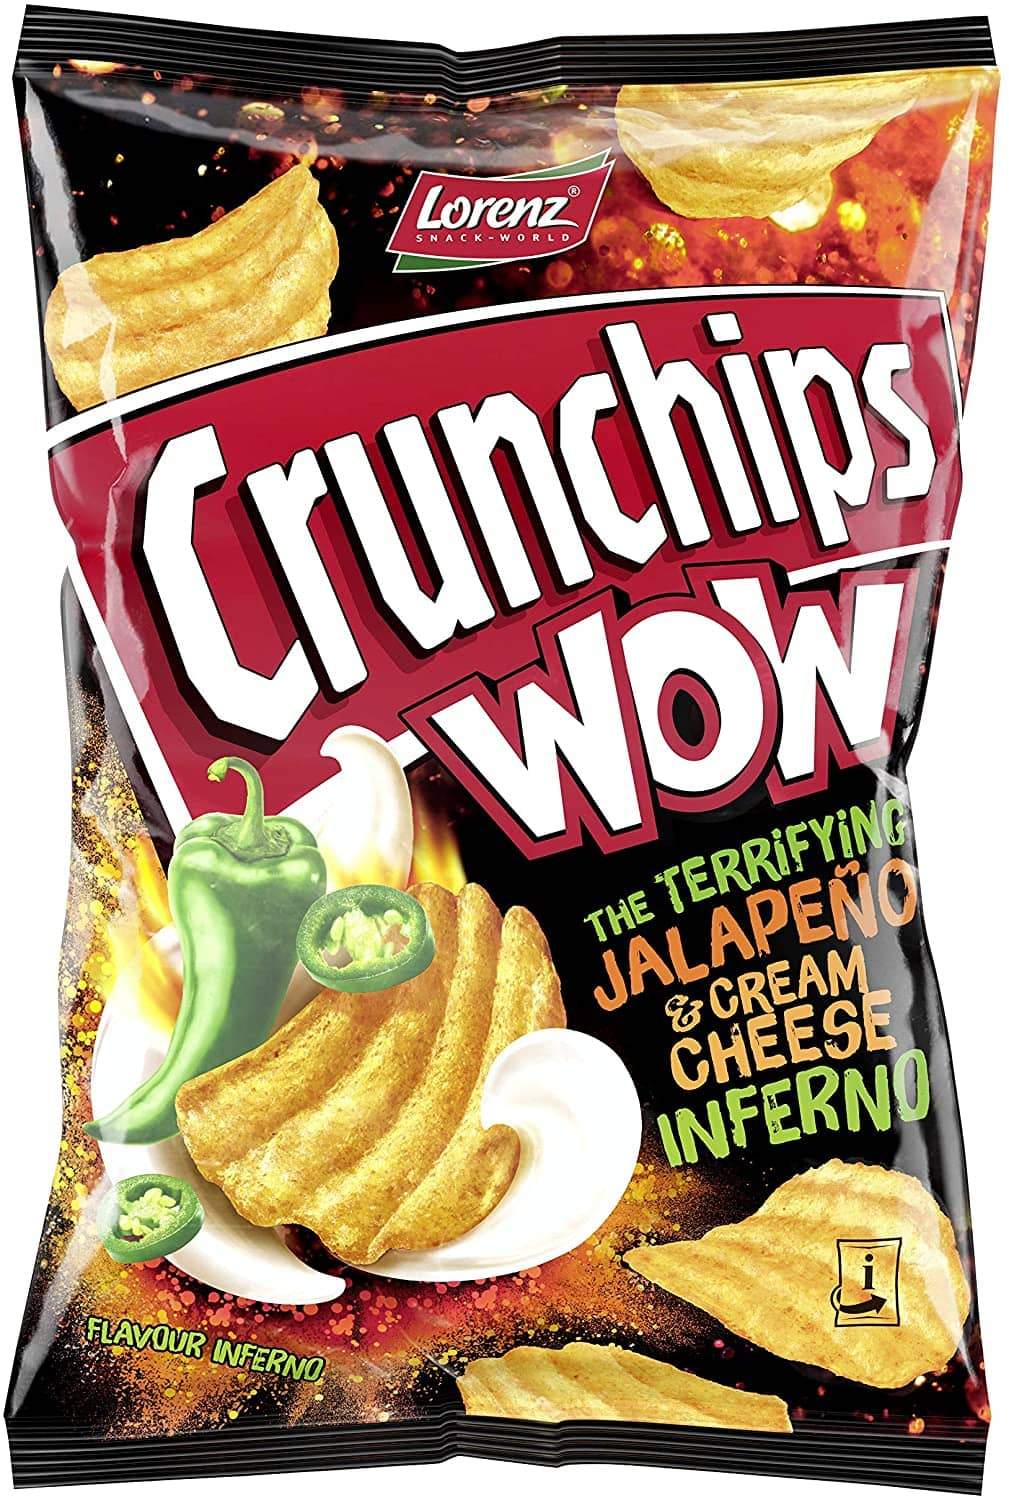 80g Crunchips – Lorenz TheWholesaleHub & Cheese Jalapeno Cream | thewholesalehub Wow